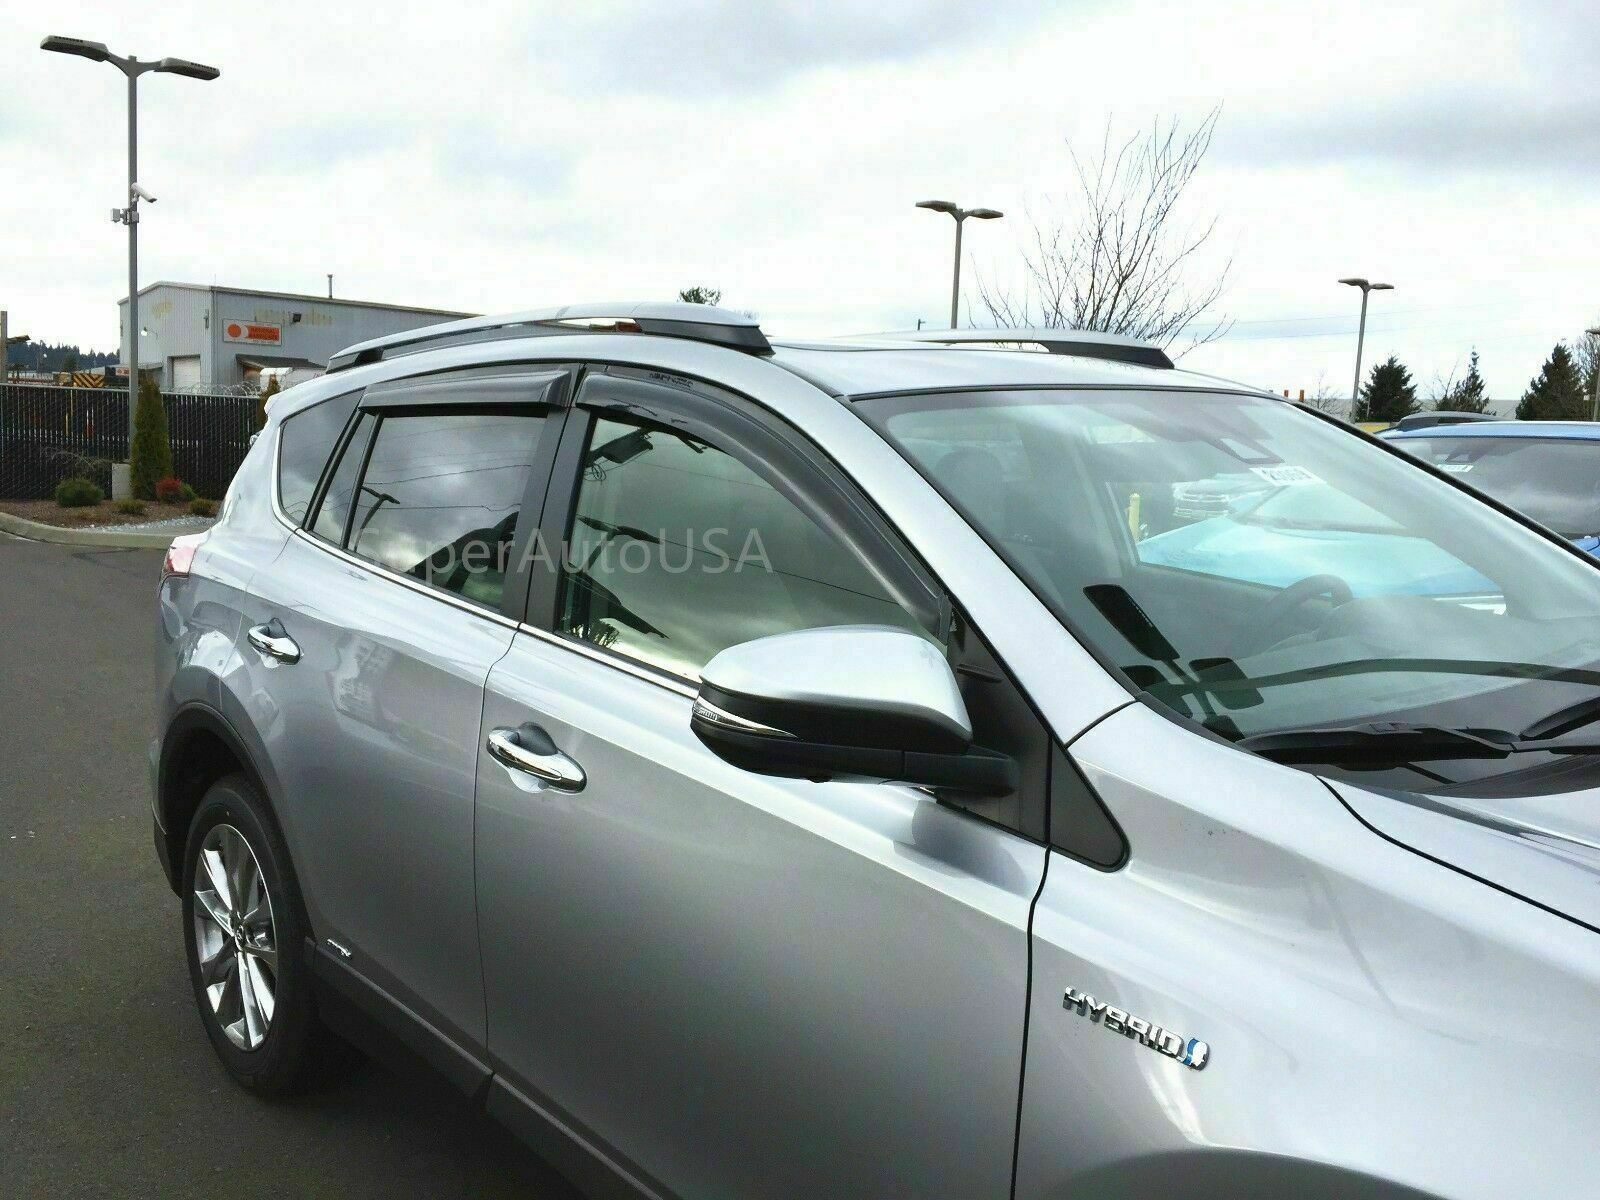 For Hyundai Santa Fe Sport 2013-2018 Out-Channel Vent Window Visors Rain Sun Wind Guards Shade Deflectors